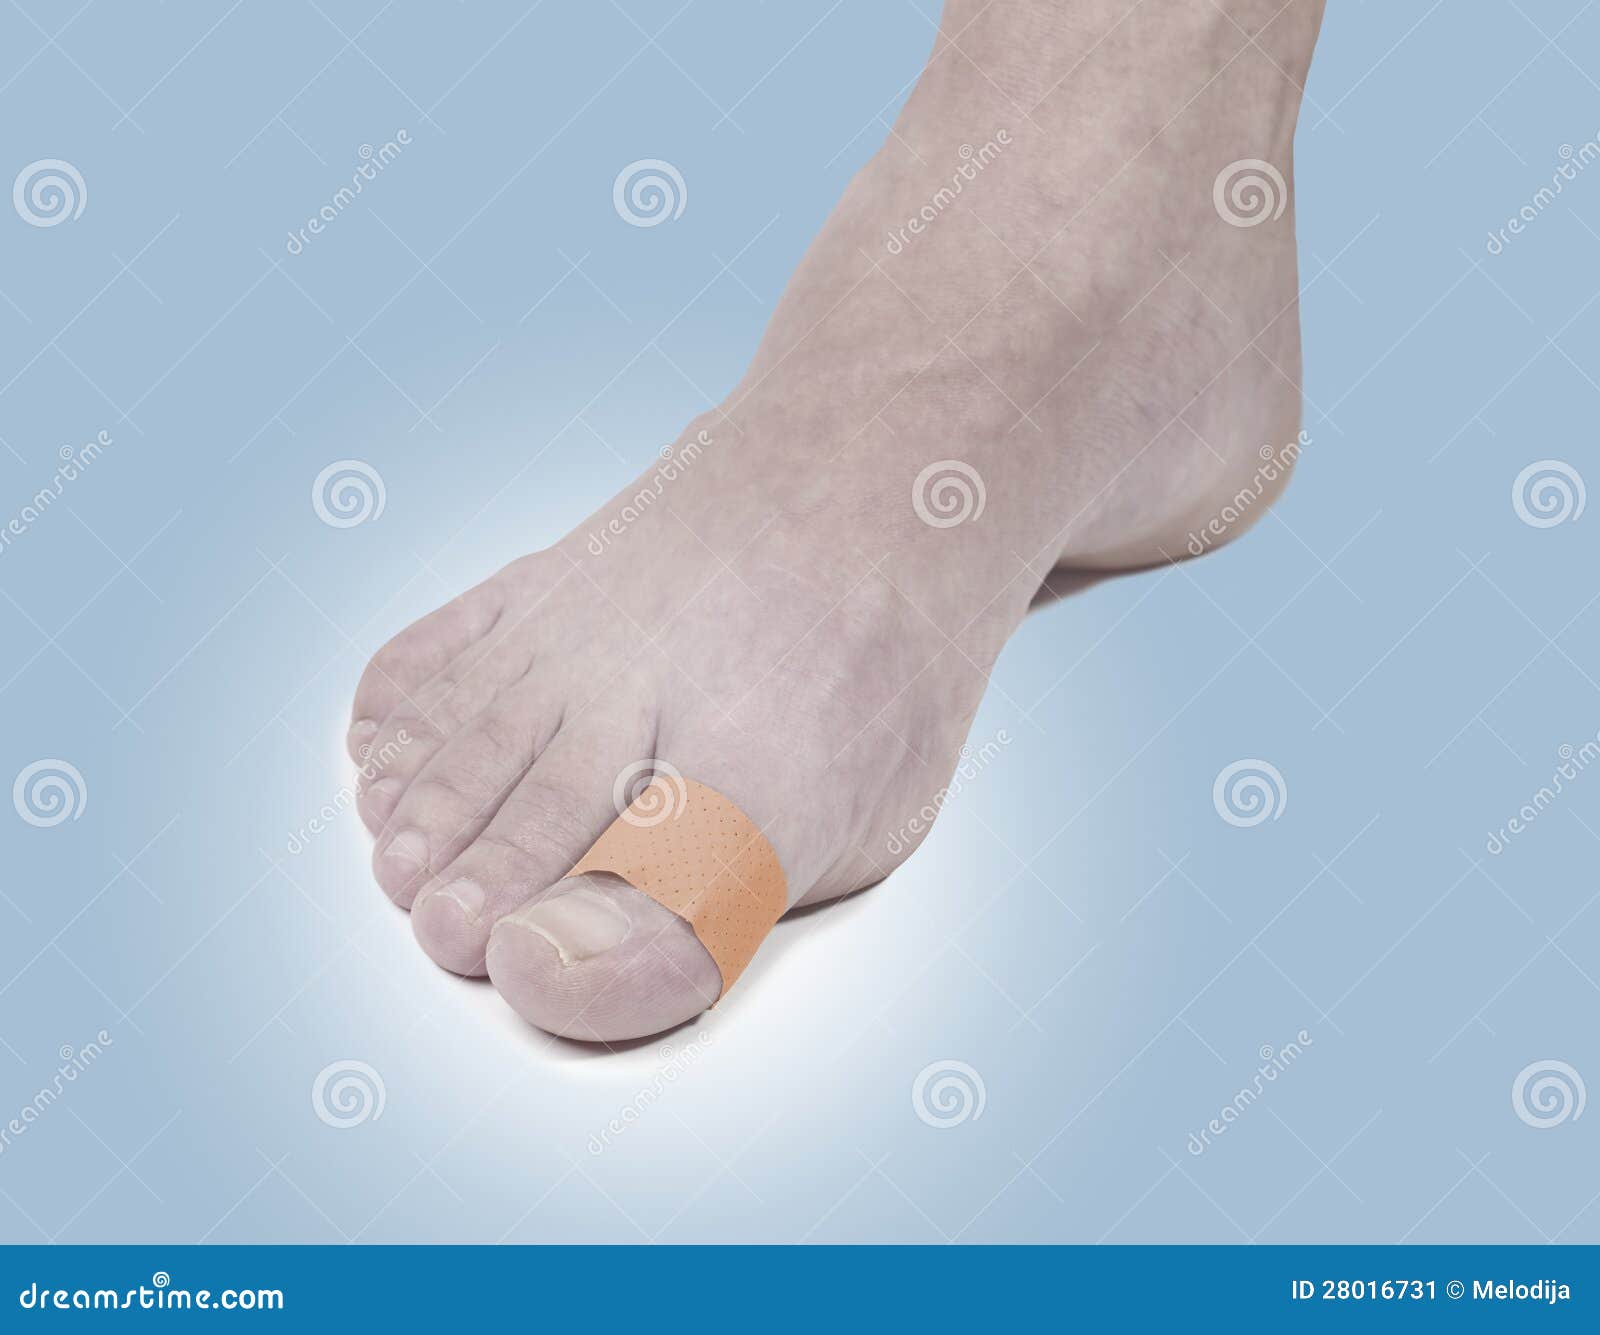 Adhesive Healing Plaster on Foot Finger. Stock Image - Image